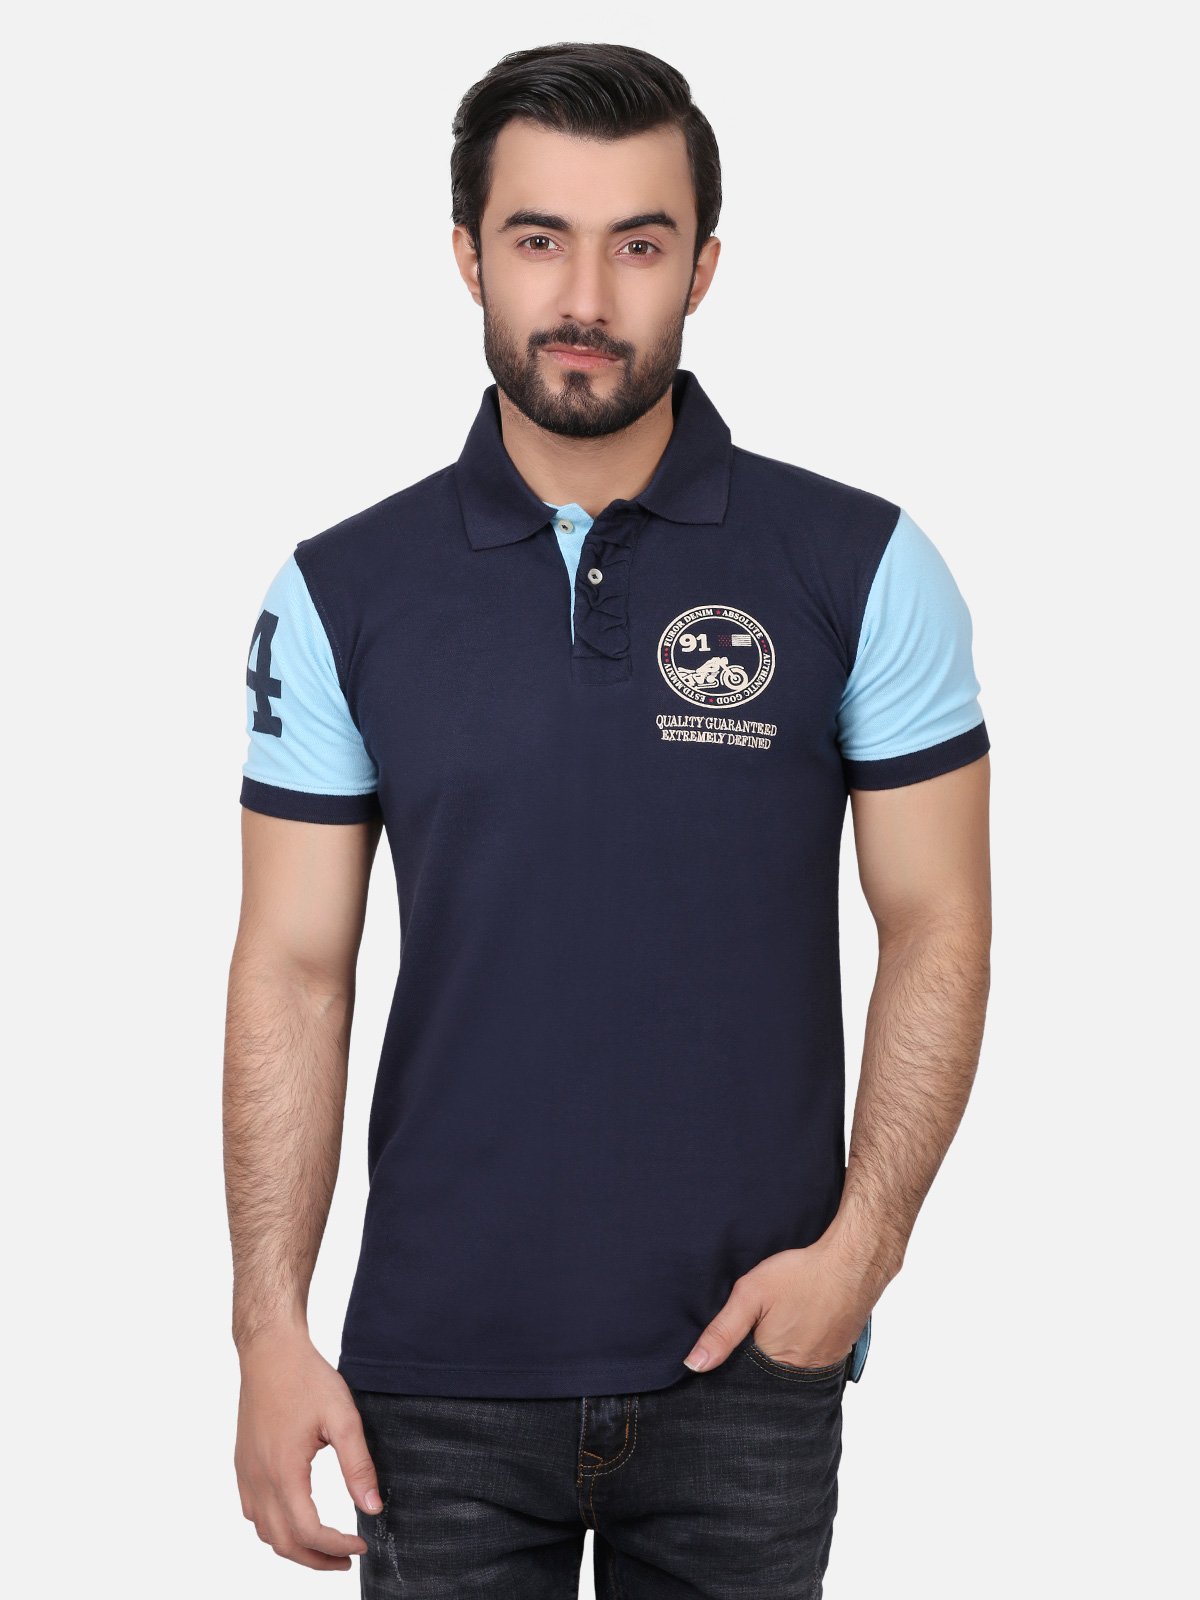 Men's Navy Polo Shirt - FMTPS17-021